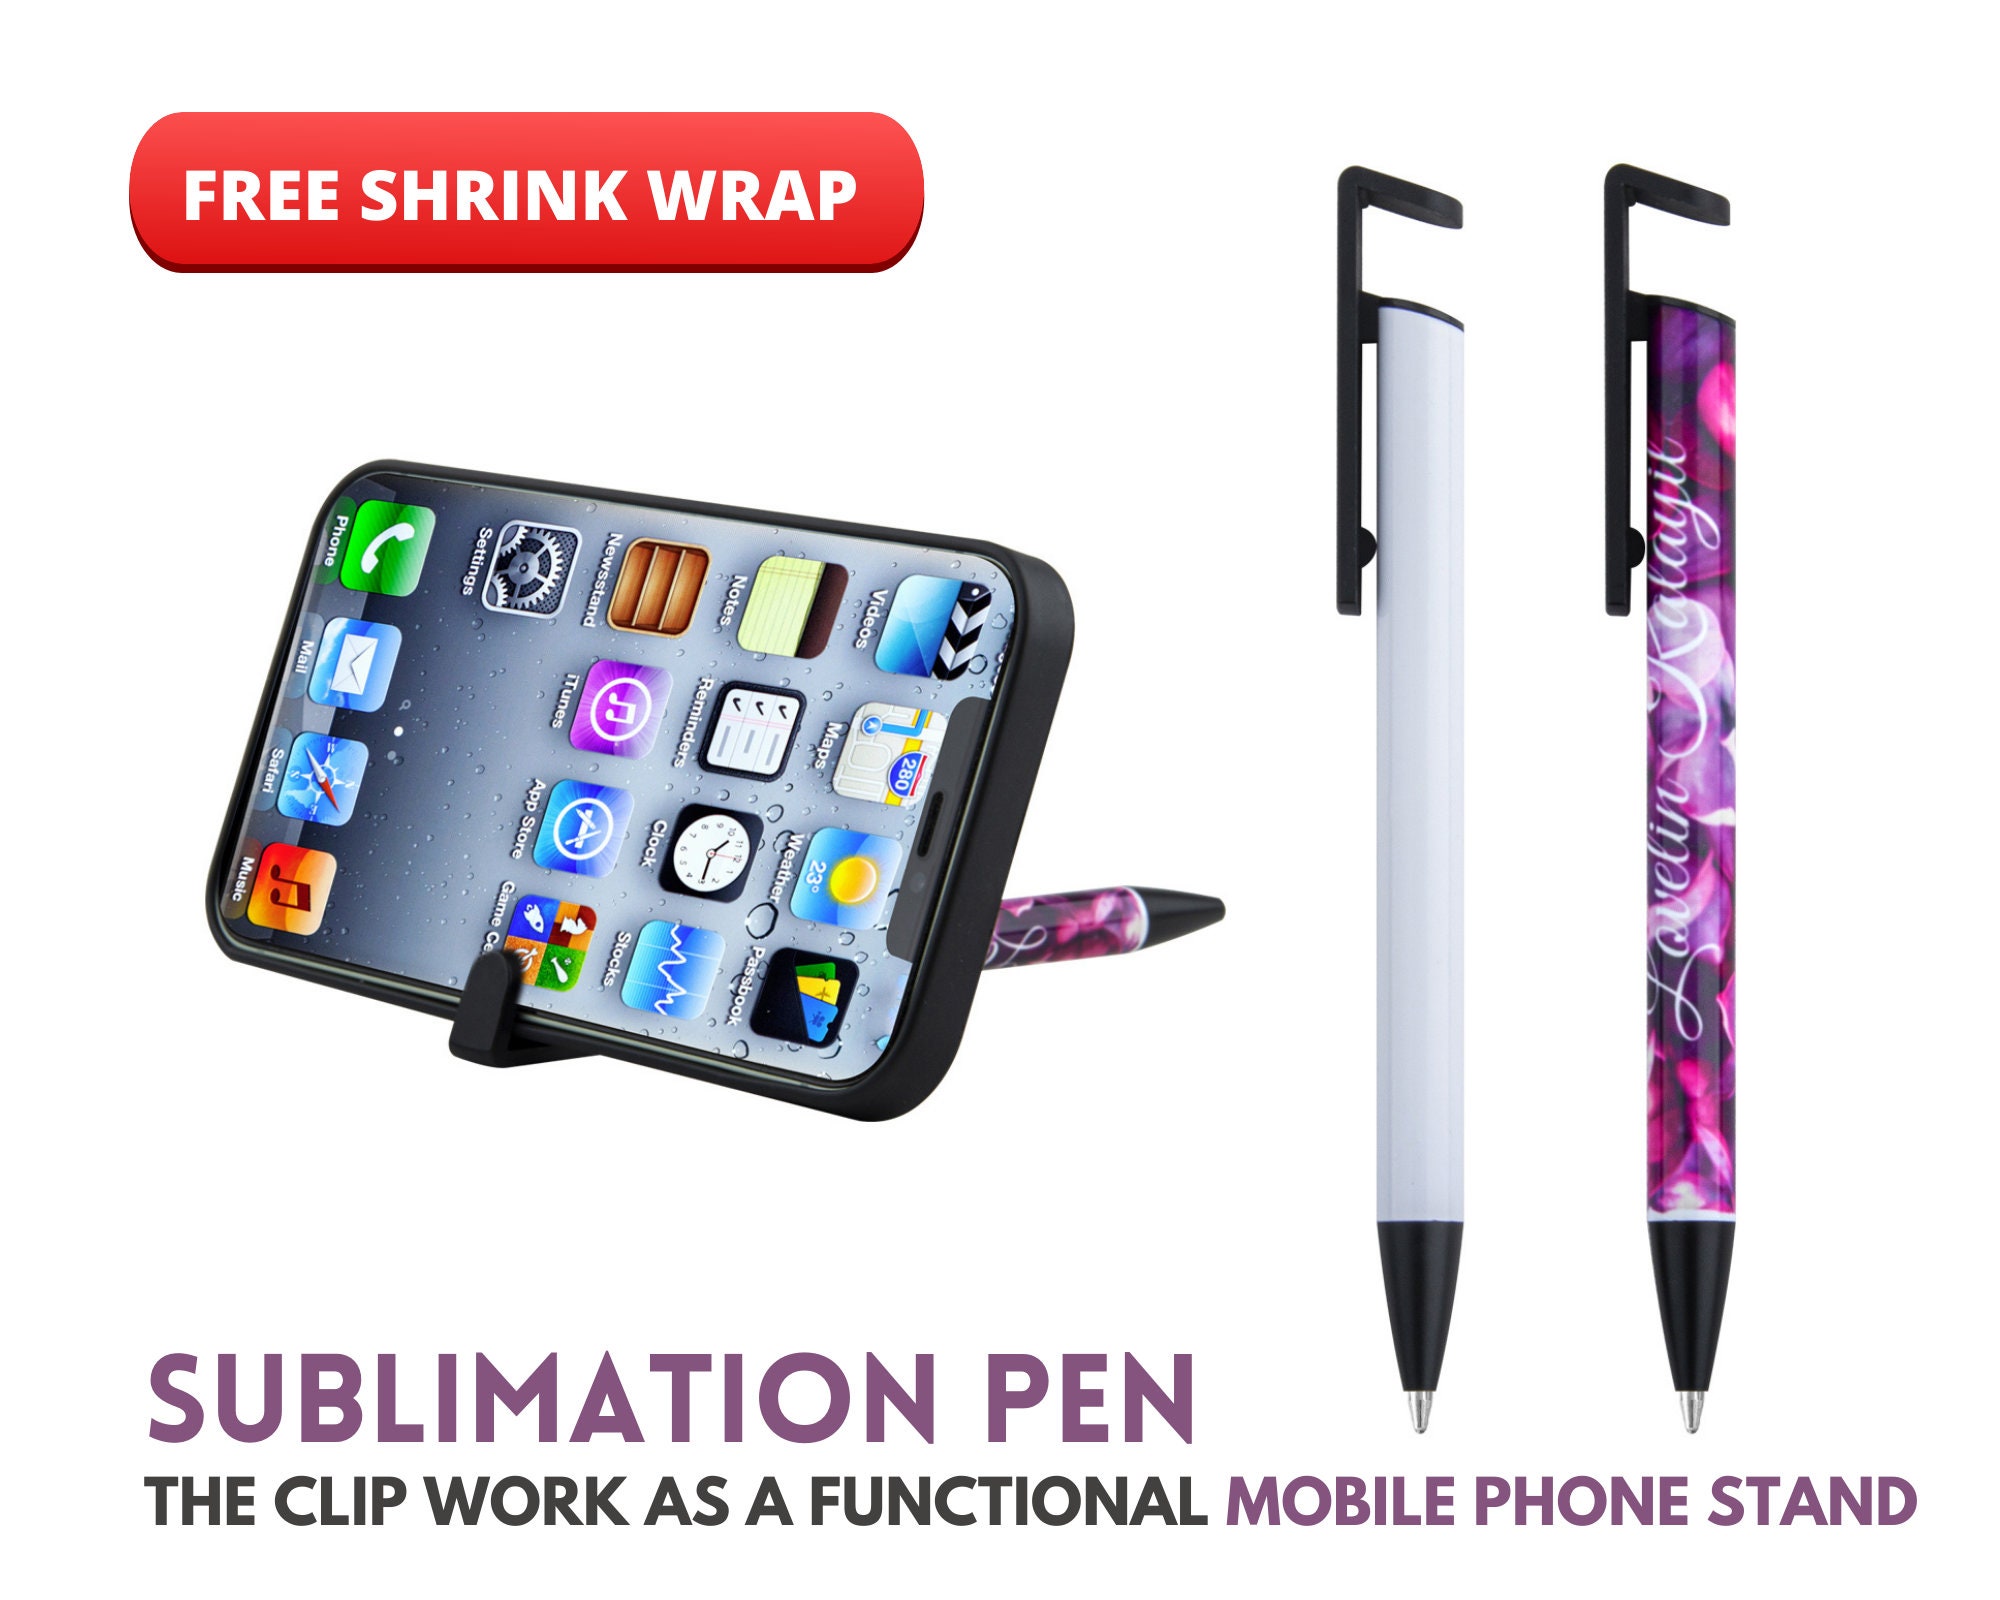 Shrink Wrap for Pens – Tamara's Tidbits (RTS Sublimation Blanks)